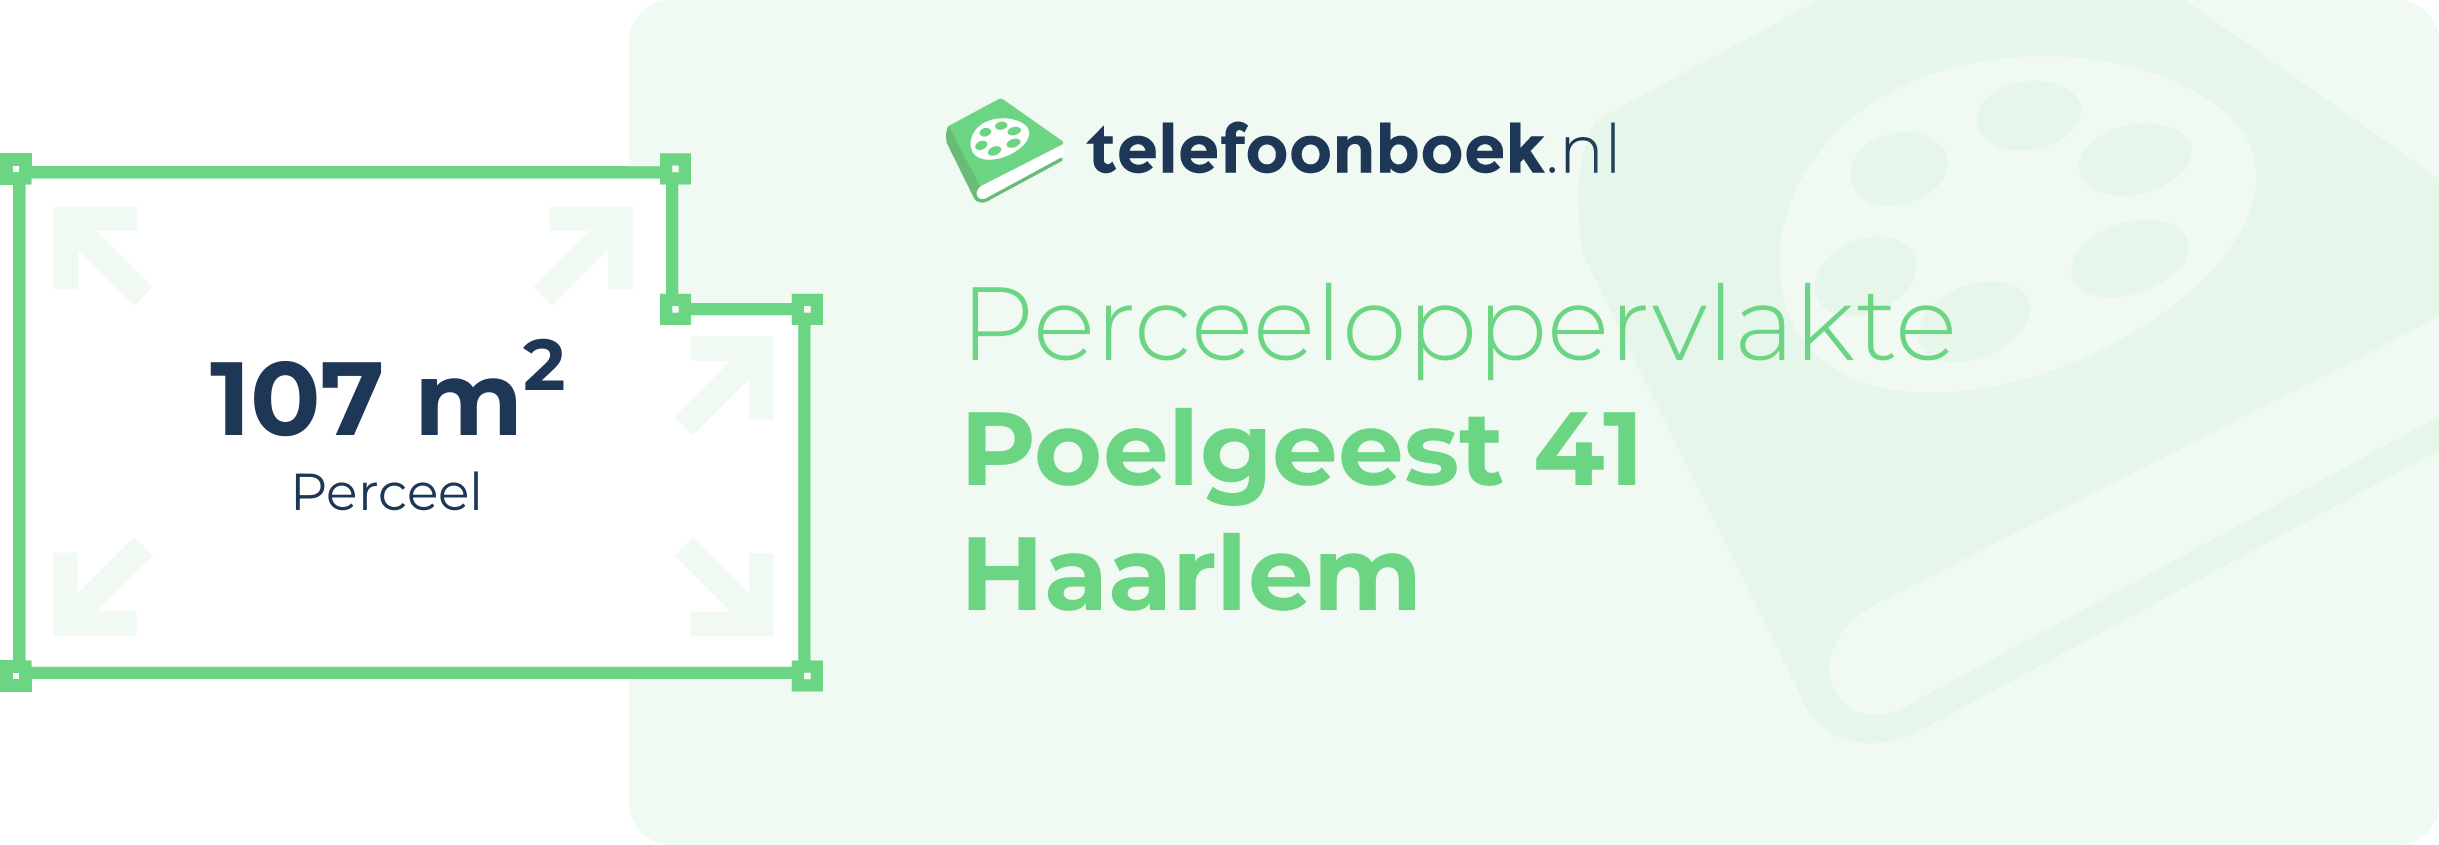 Perceeloppervlakte Poelgeest 41 Haarlem